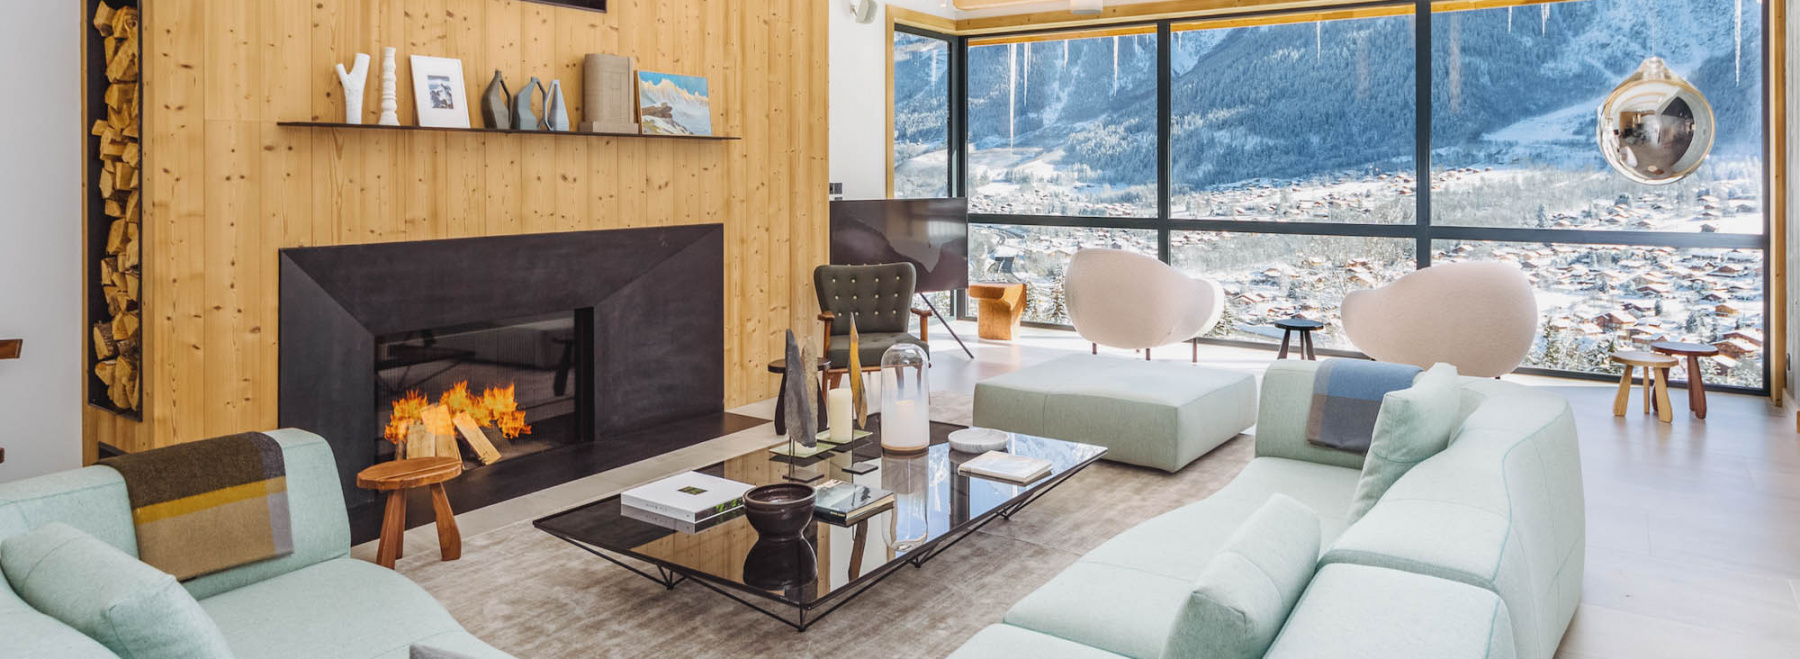 3-Chamonix-luxury-holiday-chalet-rental-living-area-CX1001.jpg